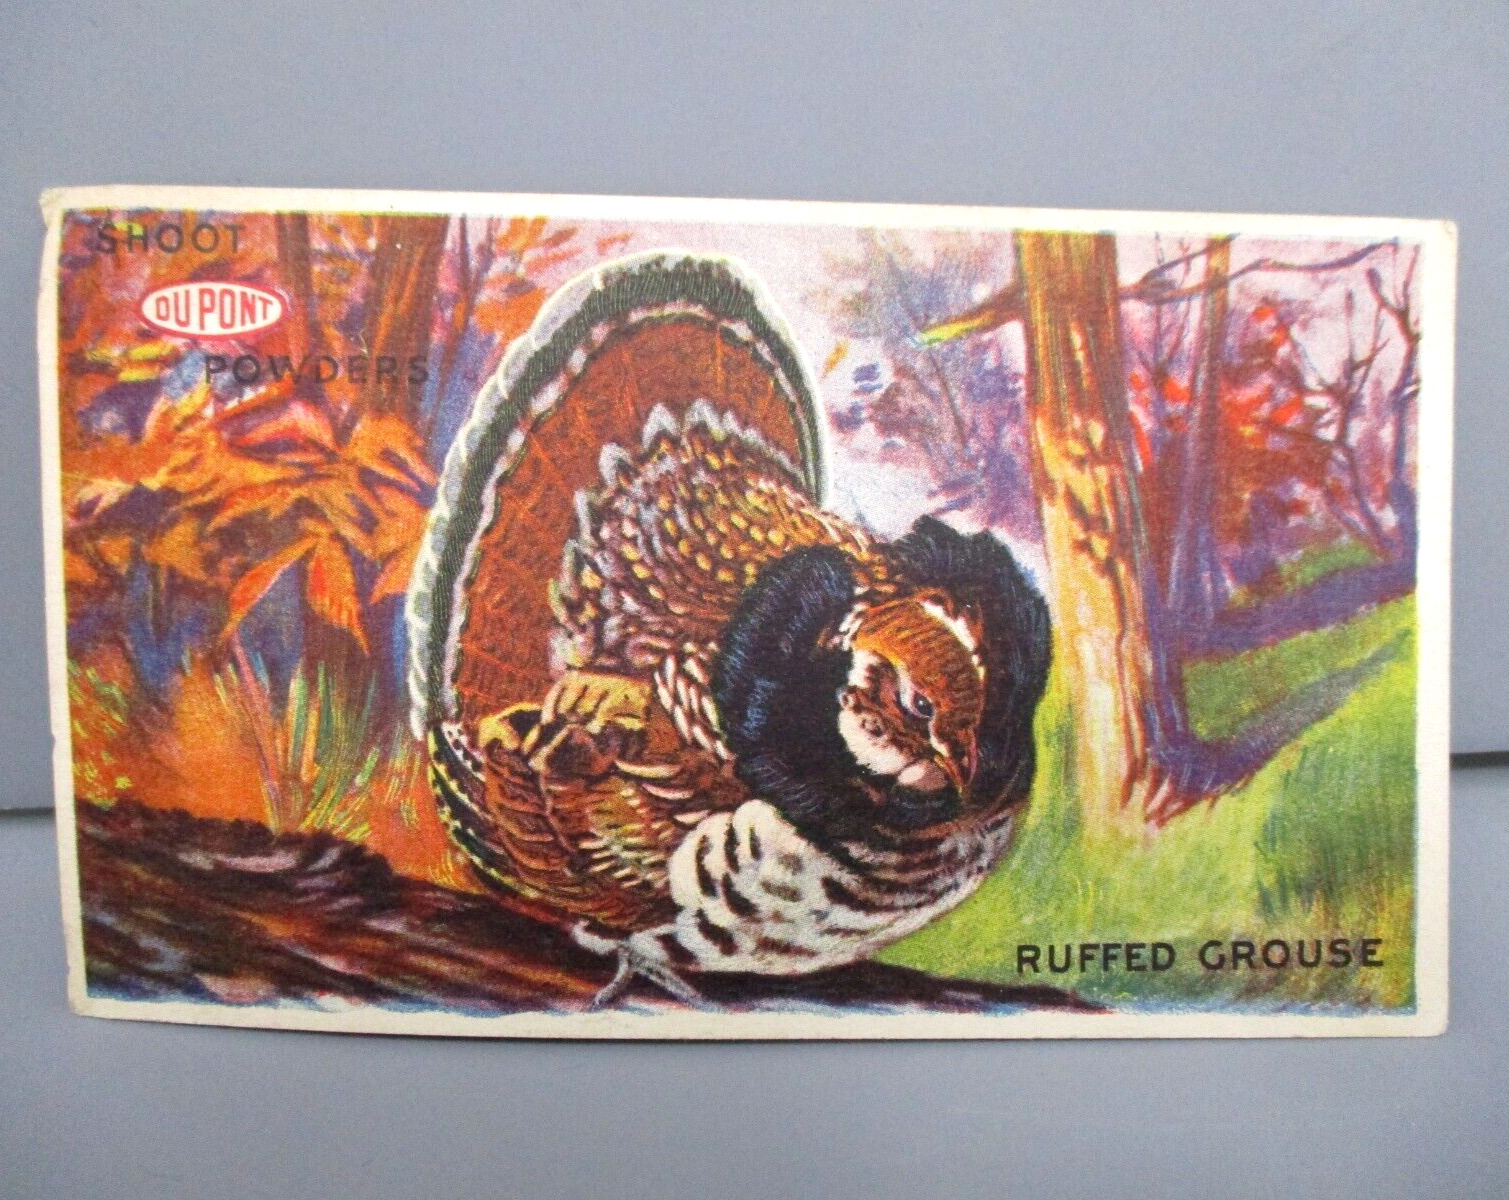 Vintage Postcard Shoot Powders Dupont Ruffed Grouse Unused Advertising